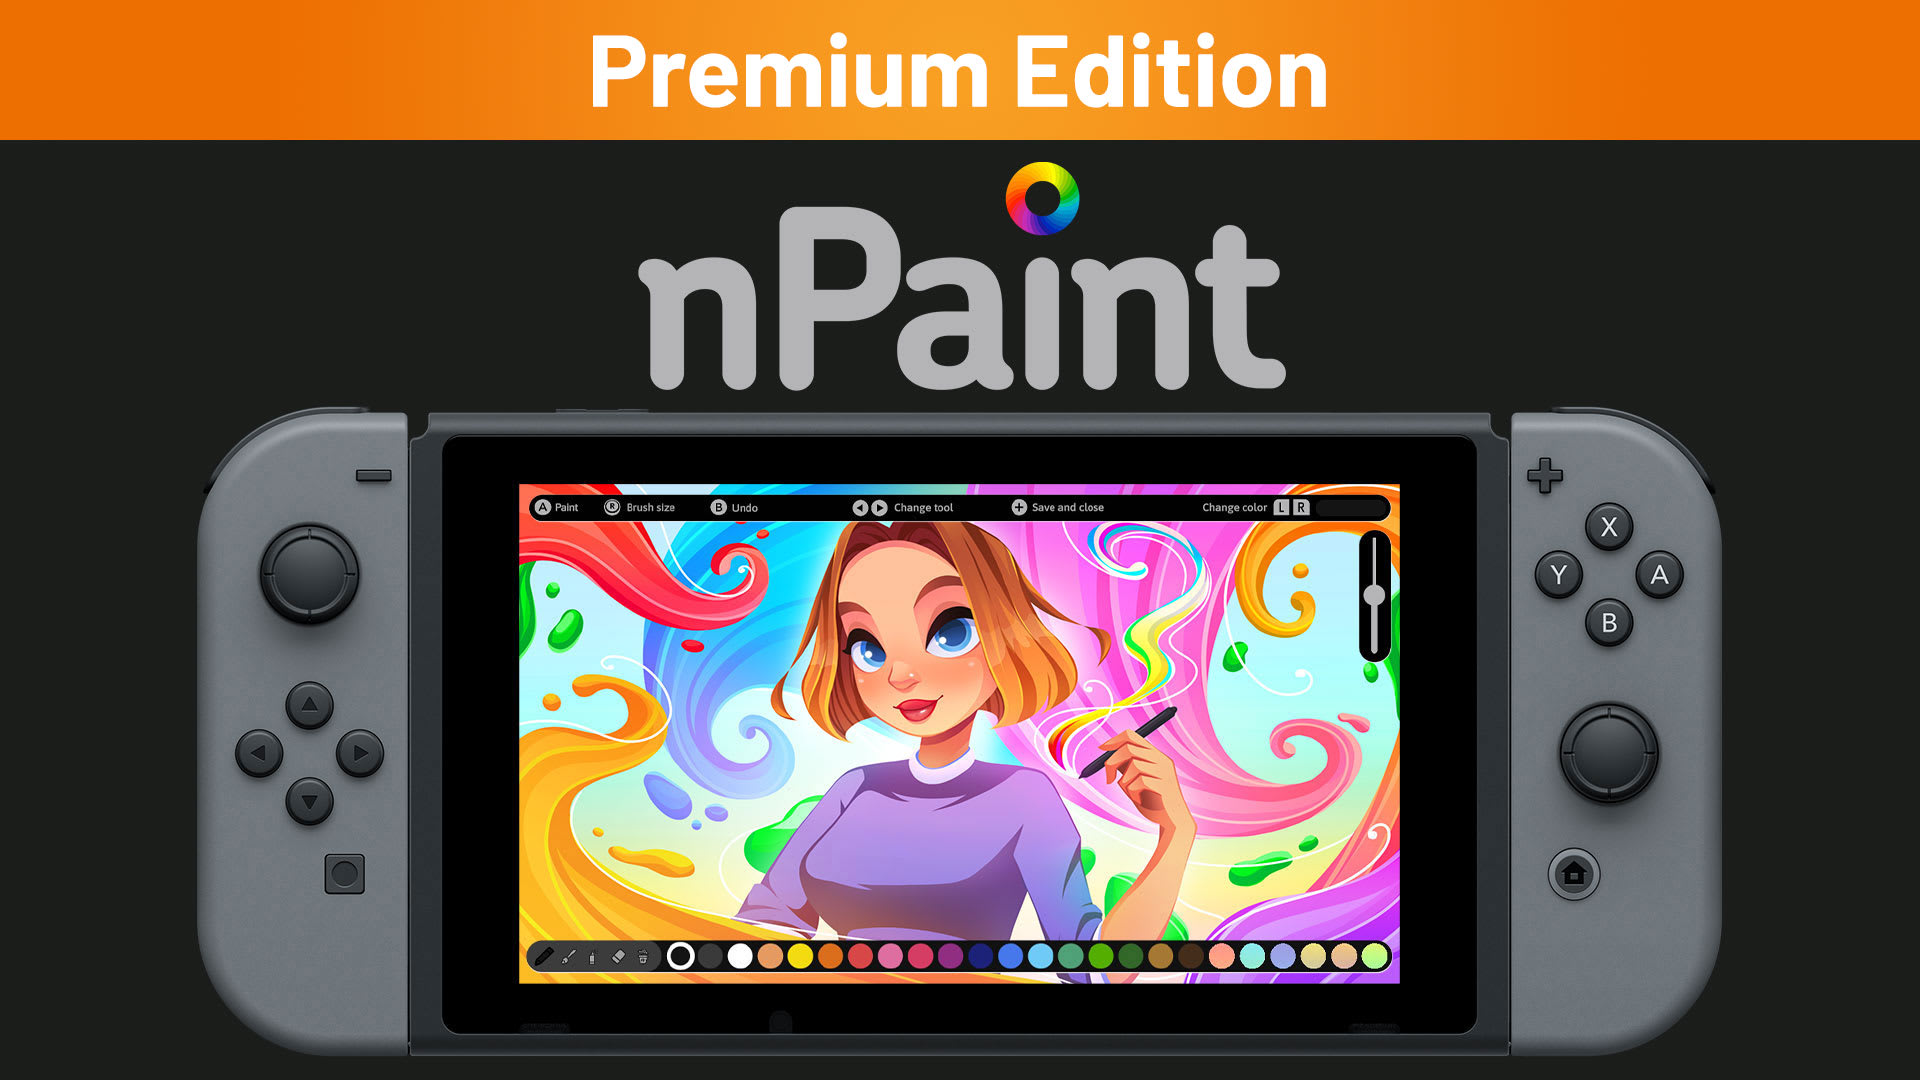 nPaint Premium Edition